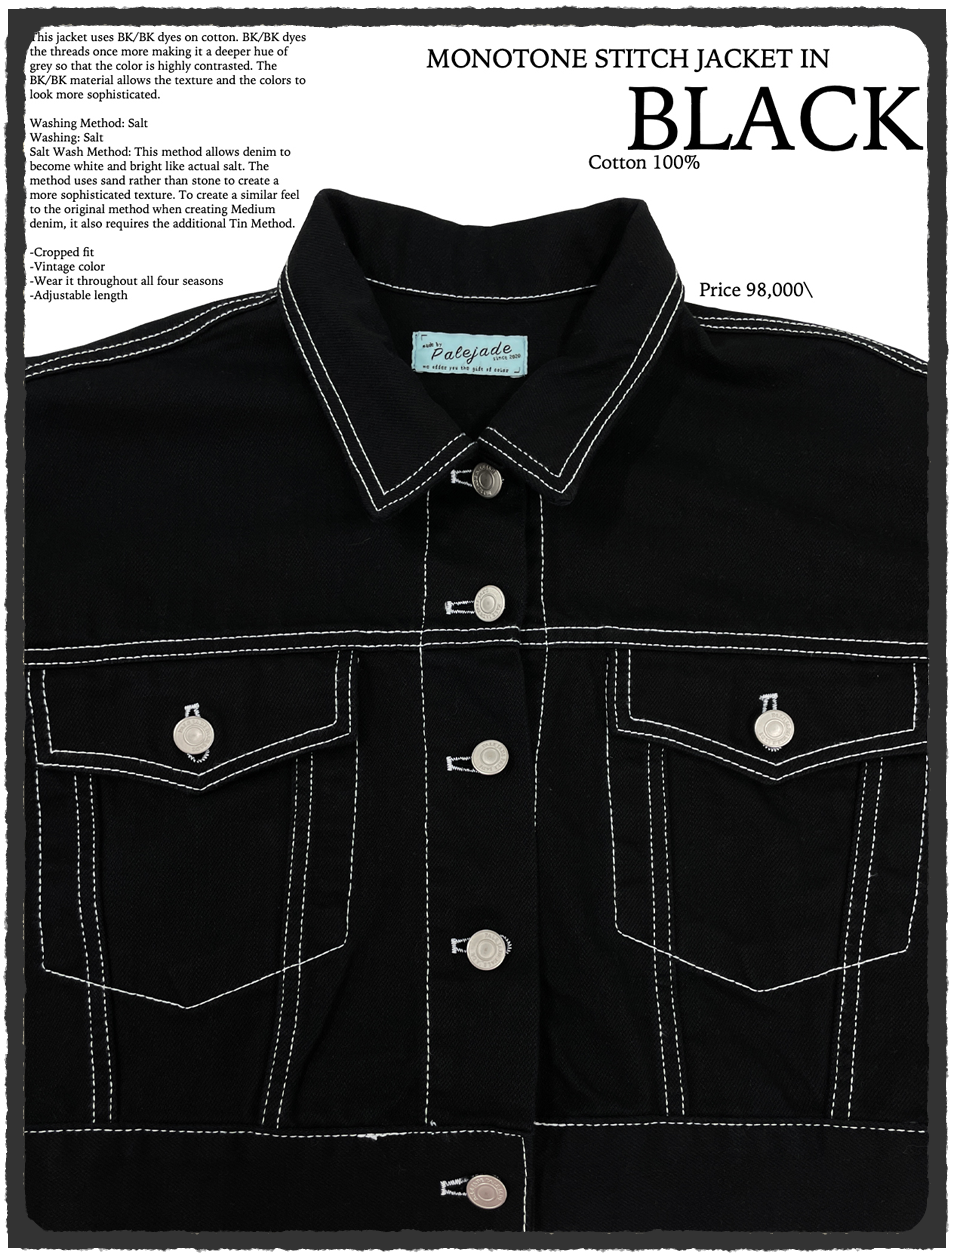 Monotone Stitch Jacket In BLACK